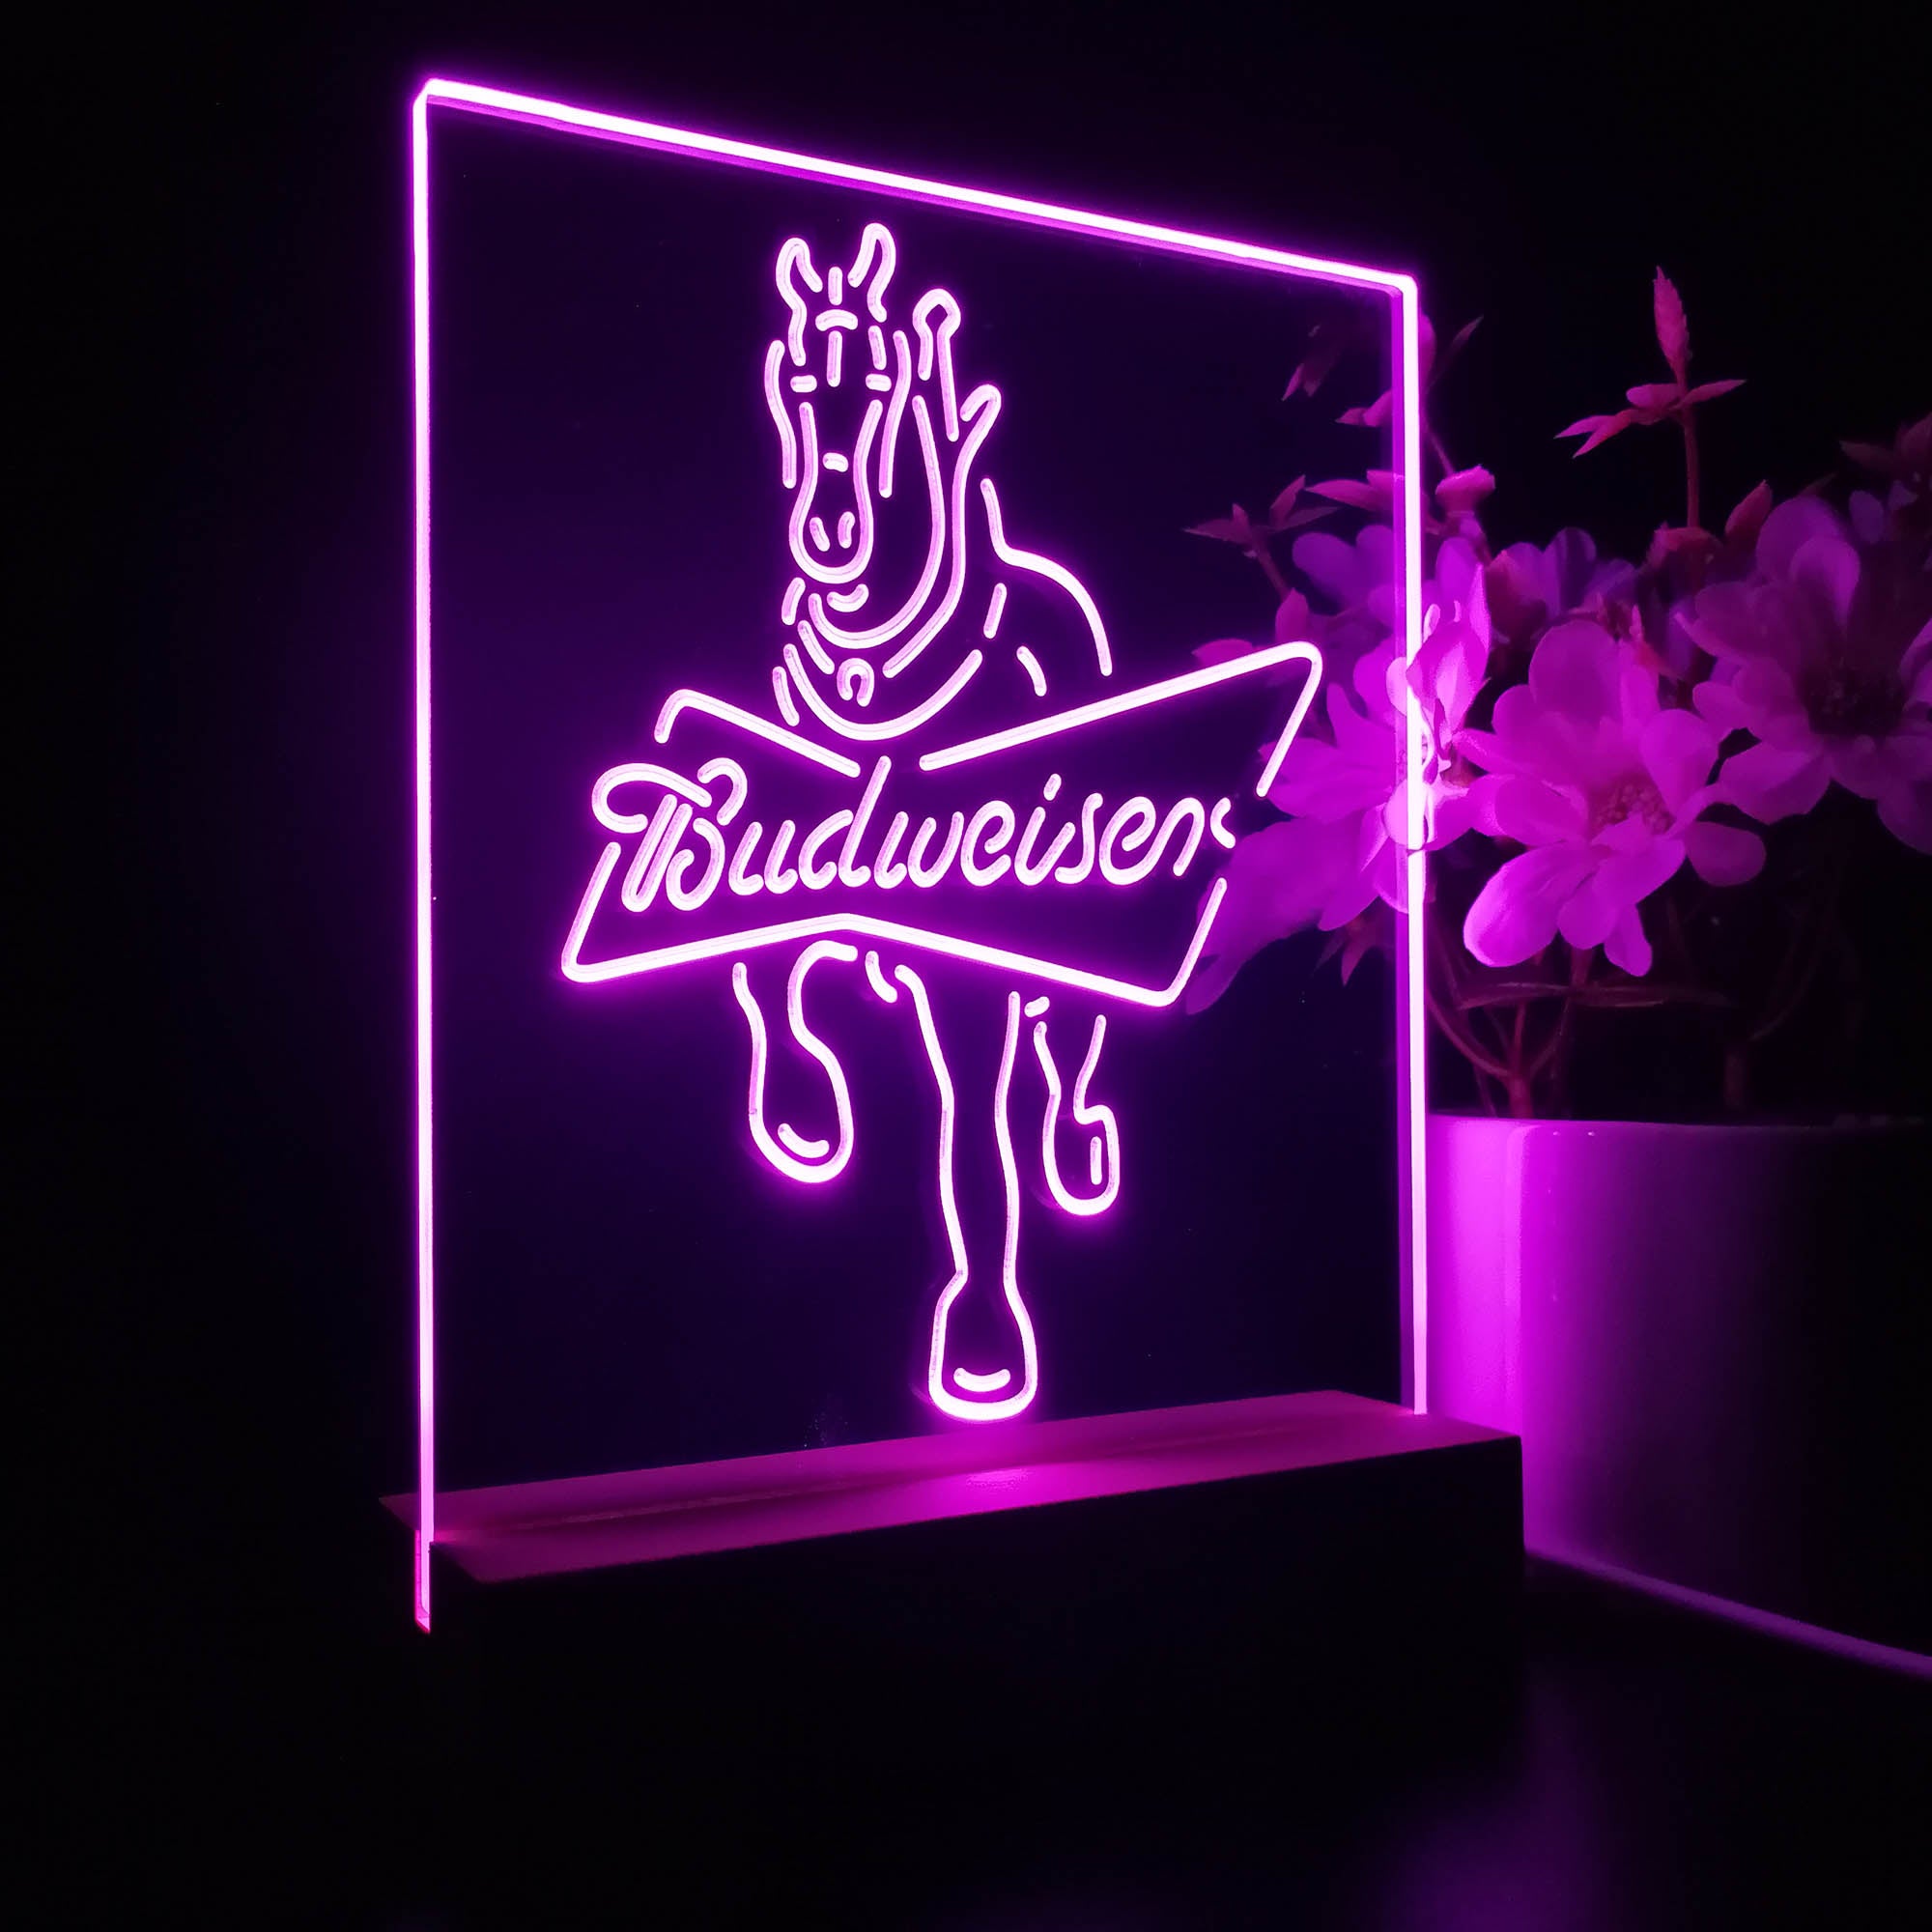 Budweiser Clydesdale Horse Night Light Neon Pub Bar Lamp